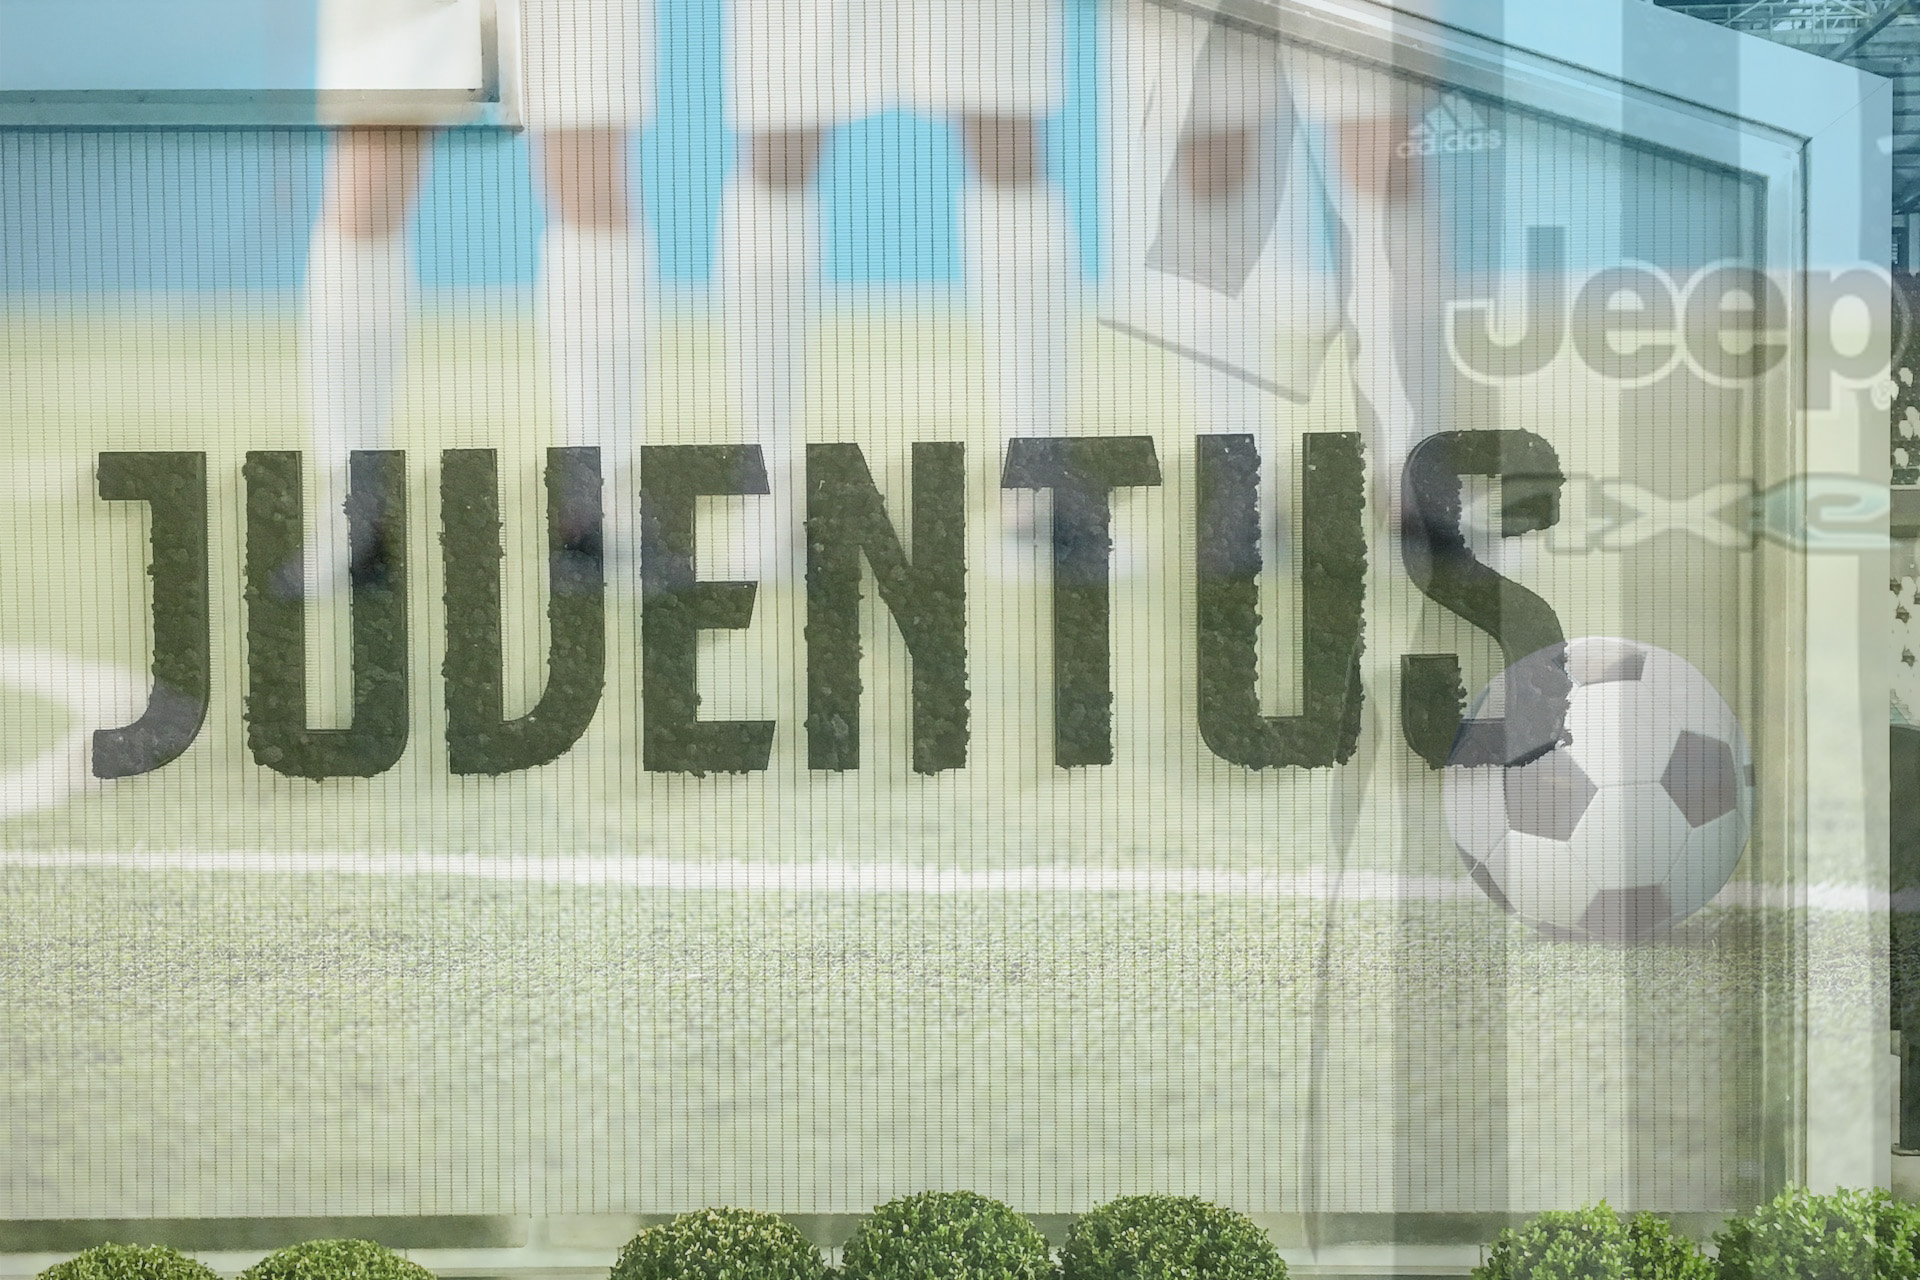 Frosinone-Juventus